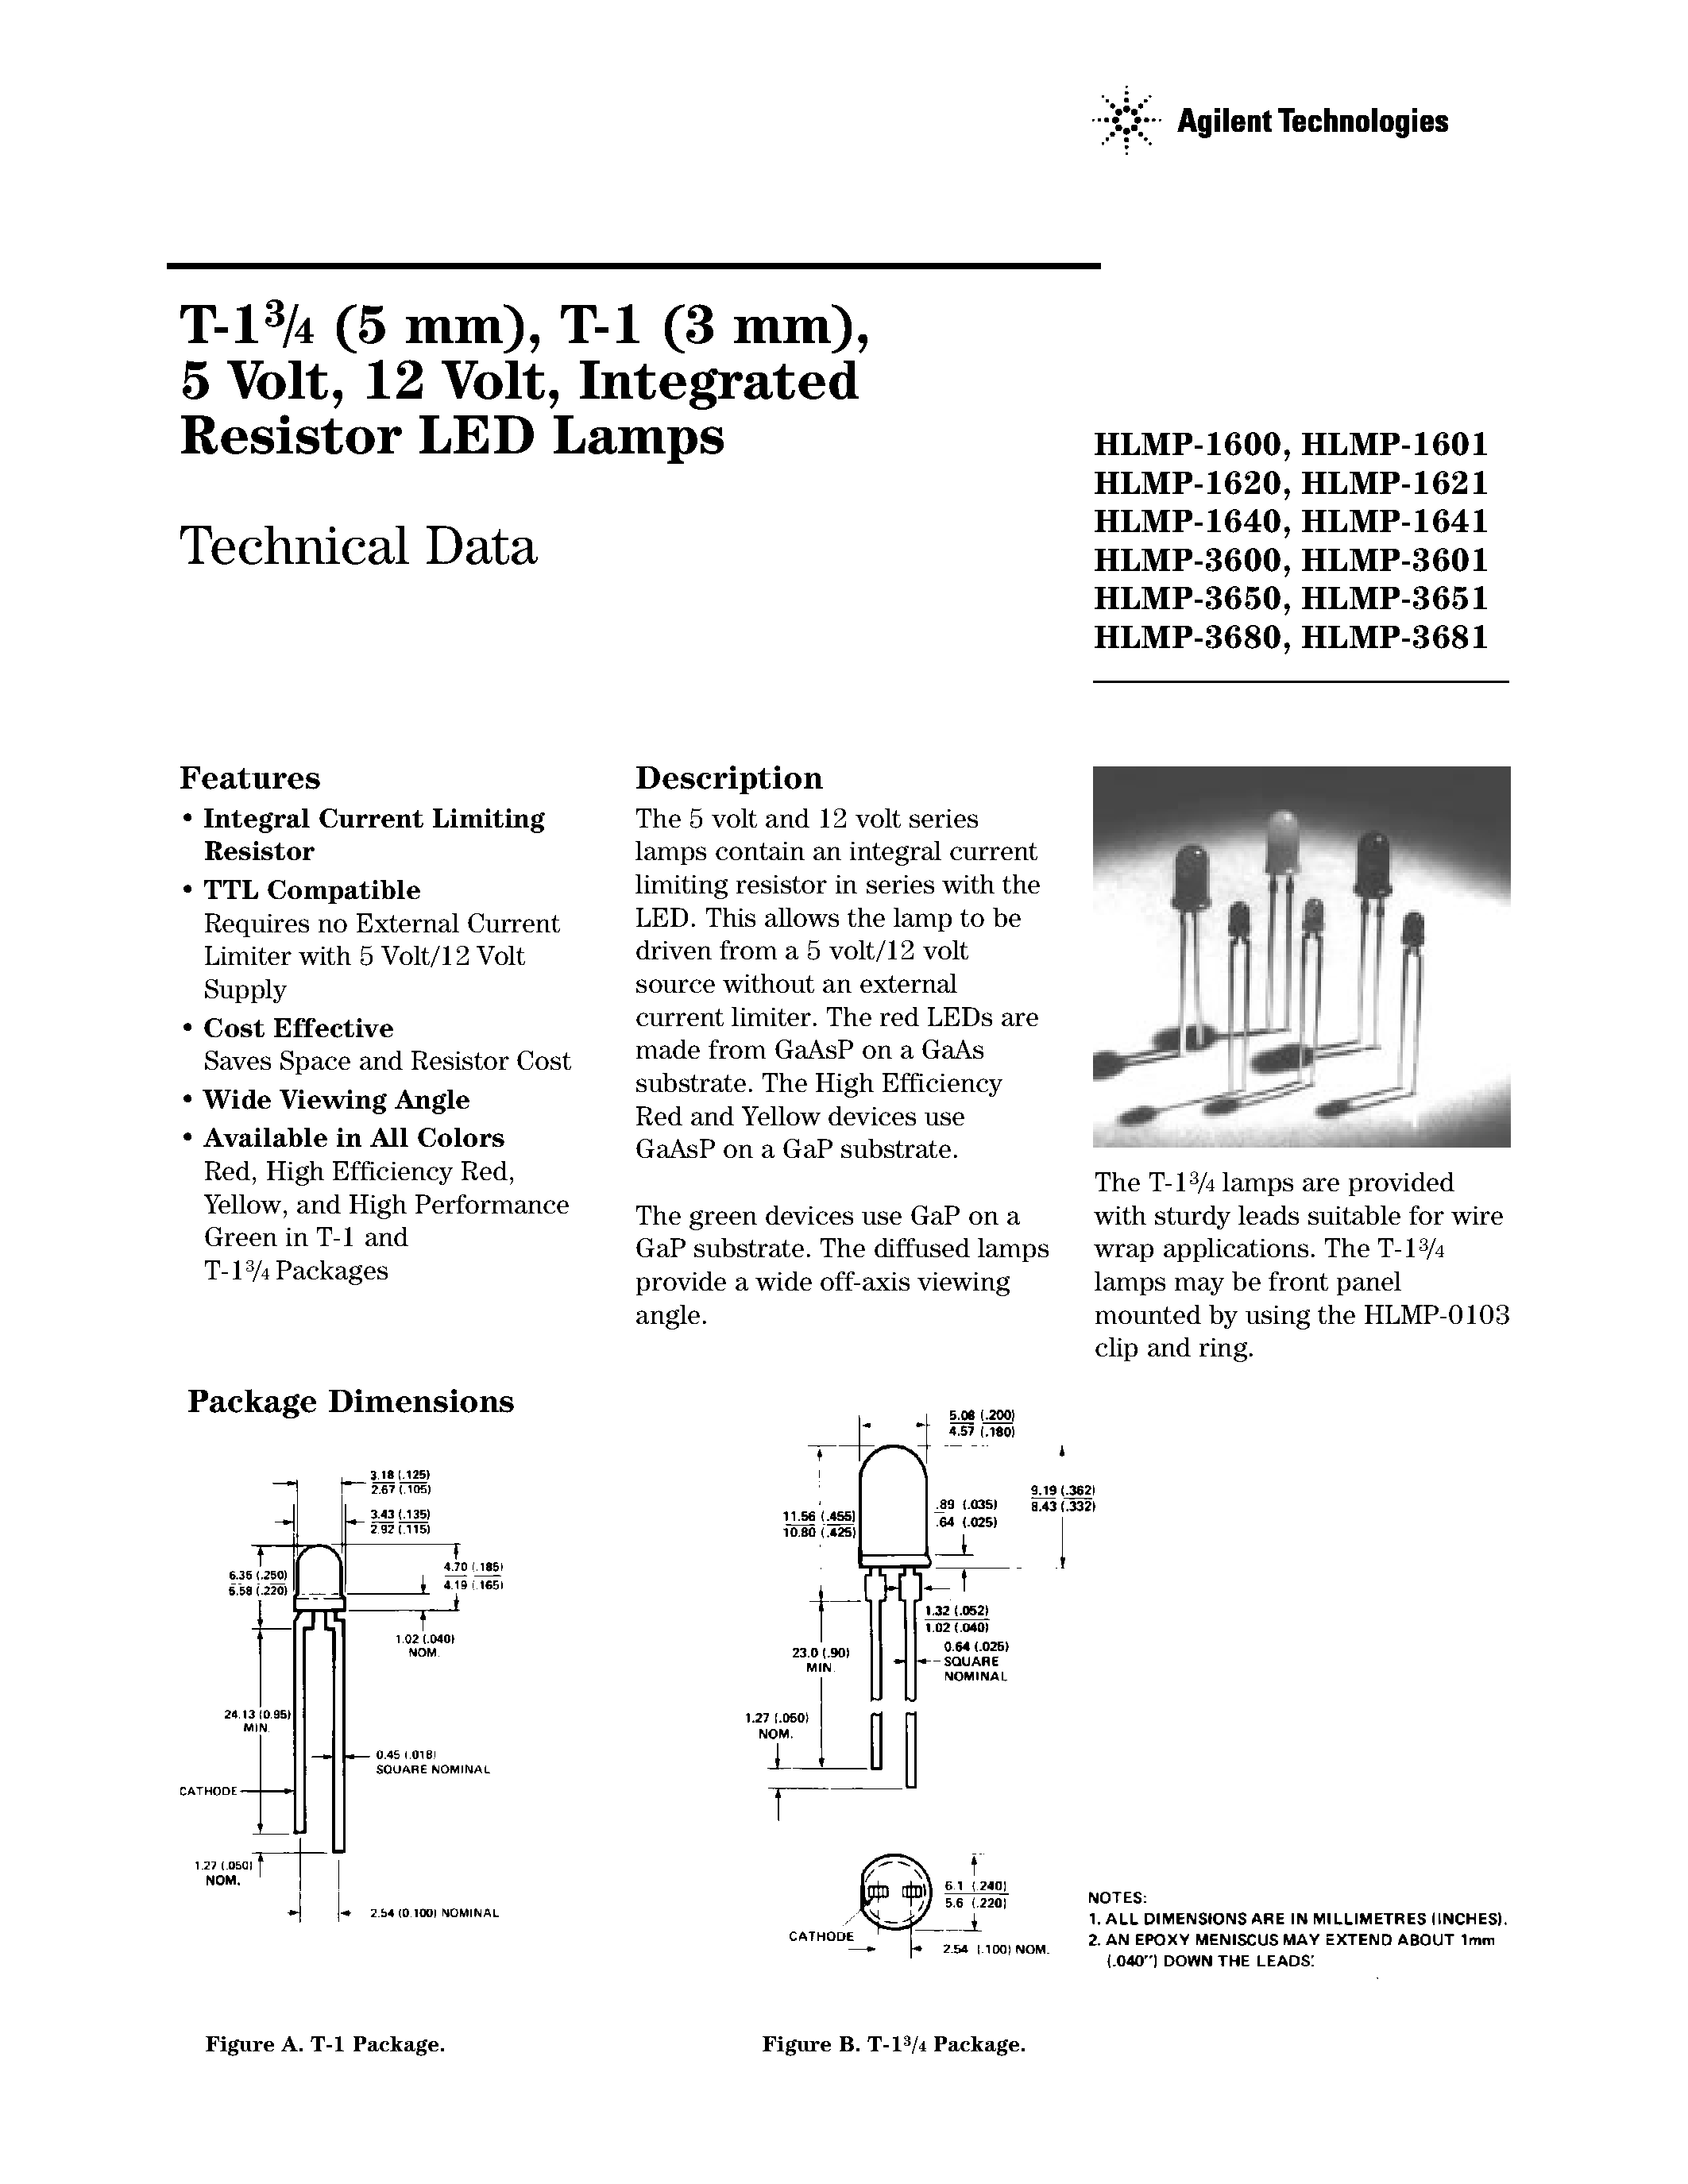 Даташит HLMP-16xx - Integrated Resistor LED Lamps страница 1